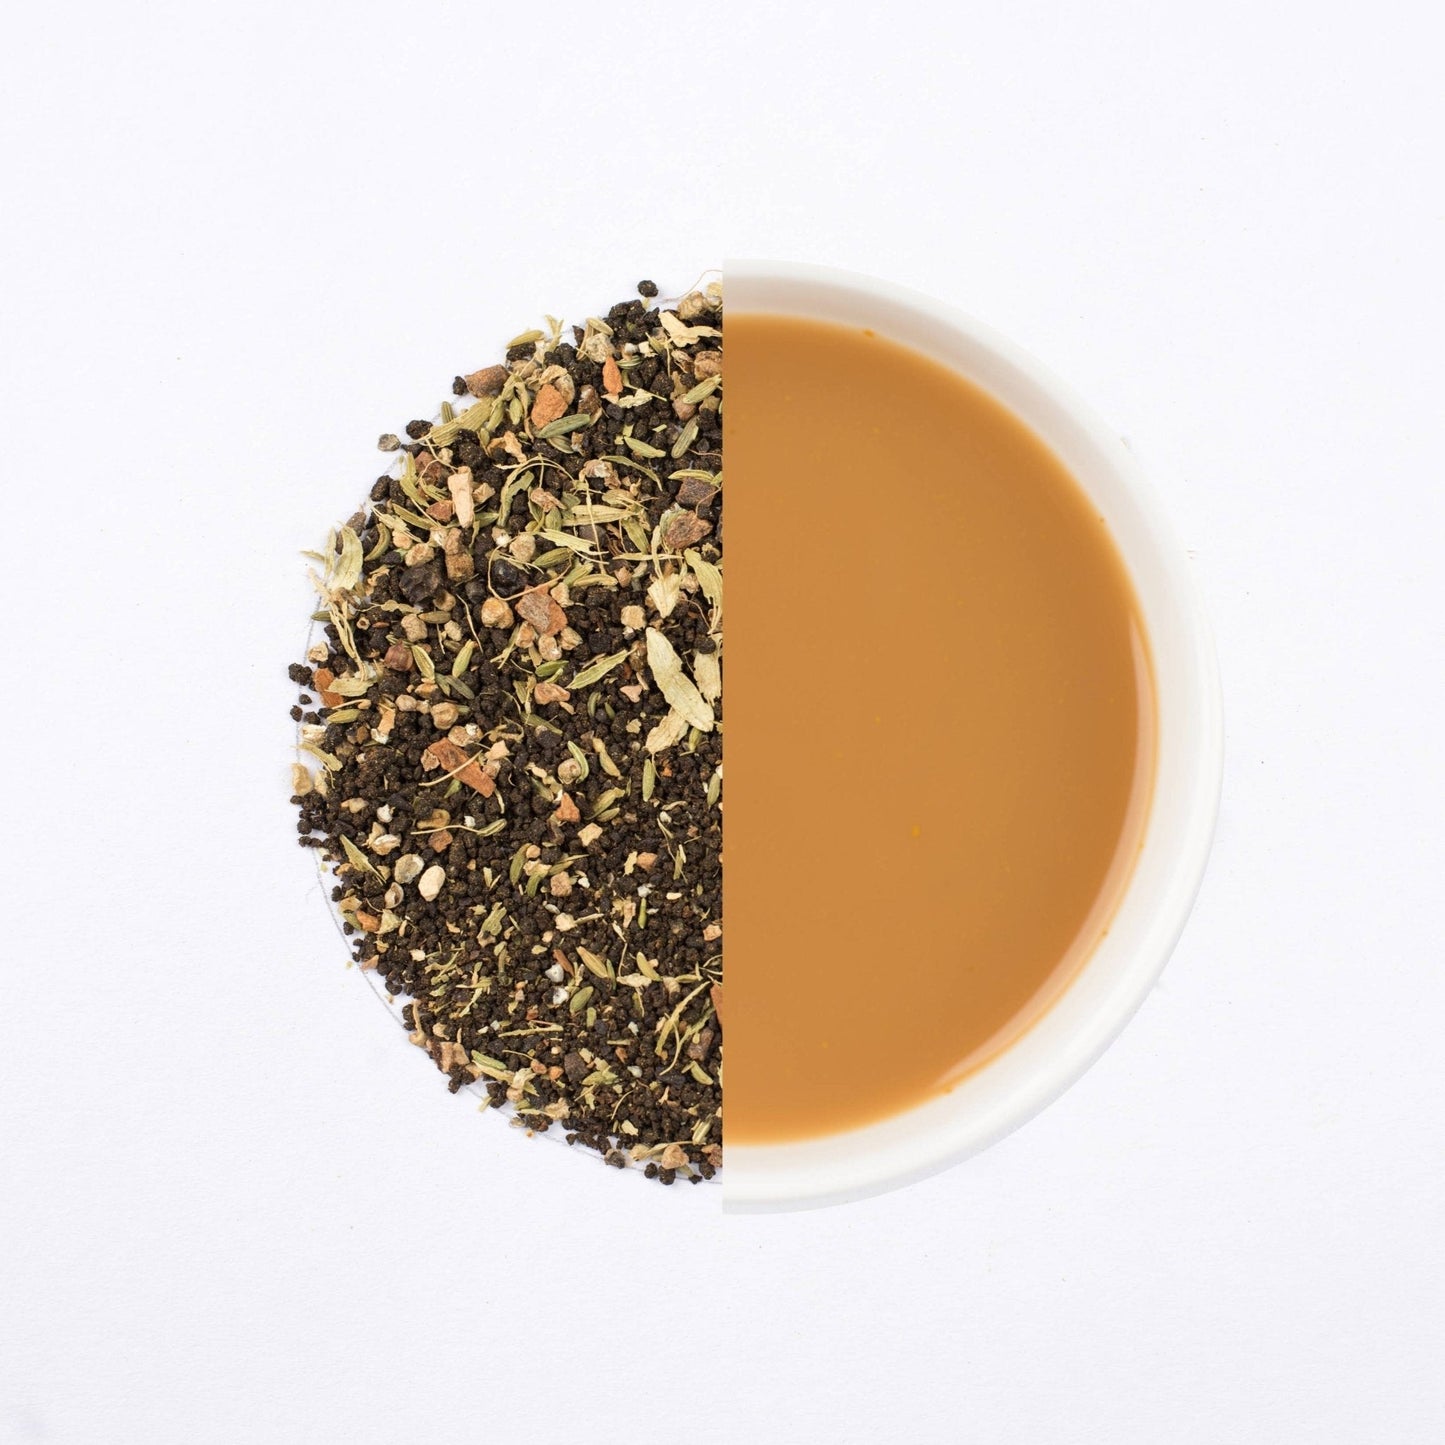 11 Spices Chai Sample & Saffron Chai Sample with Tea Bag Squeezer - ChaiBag